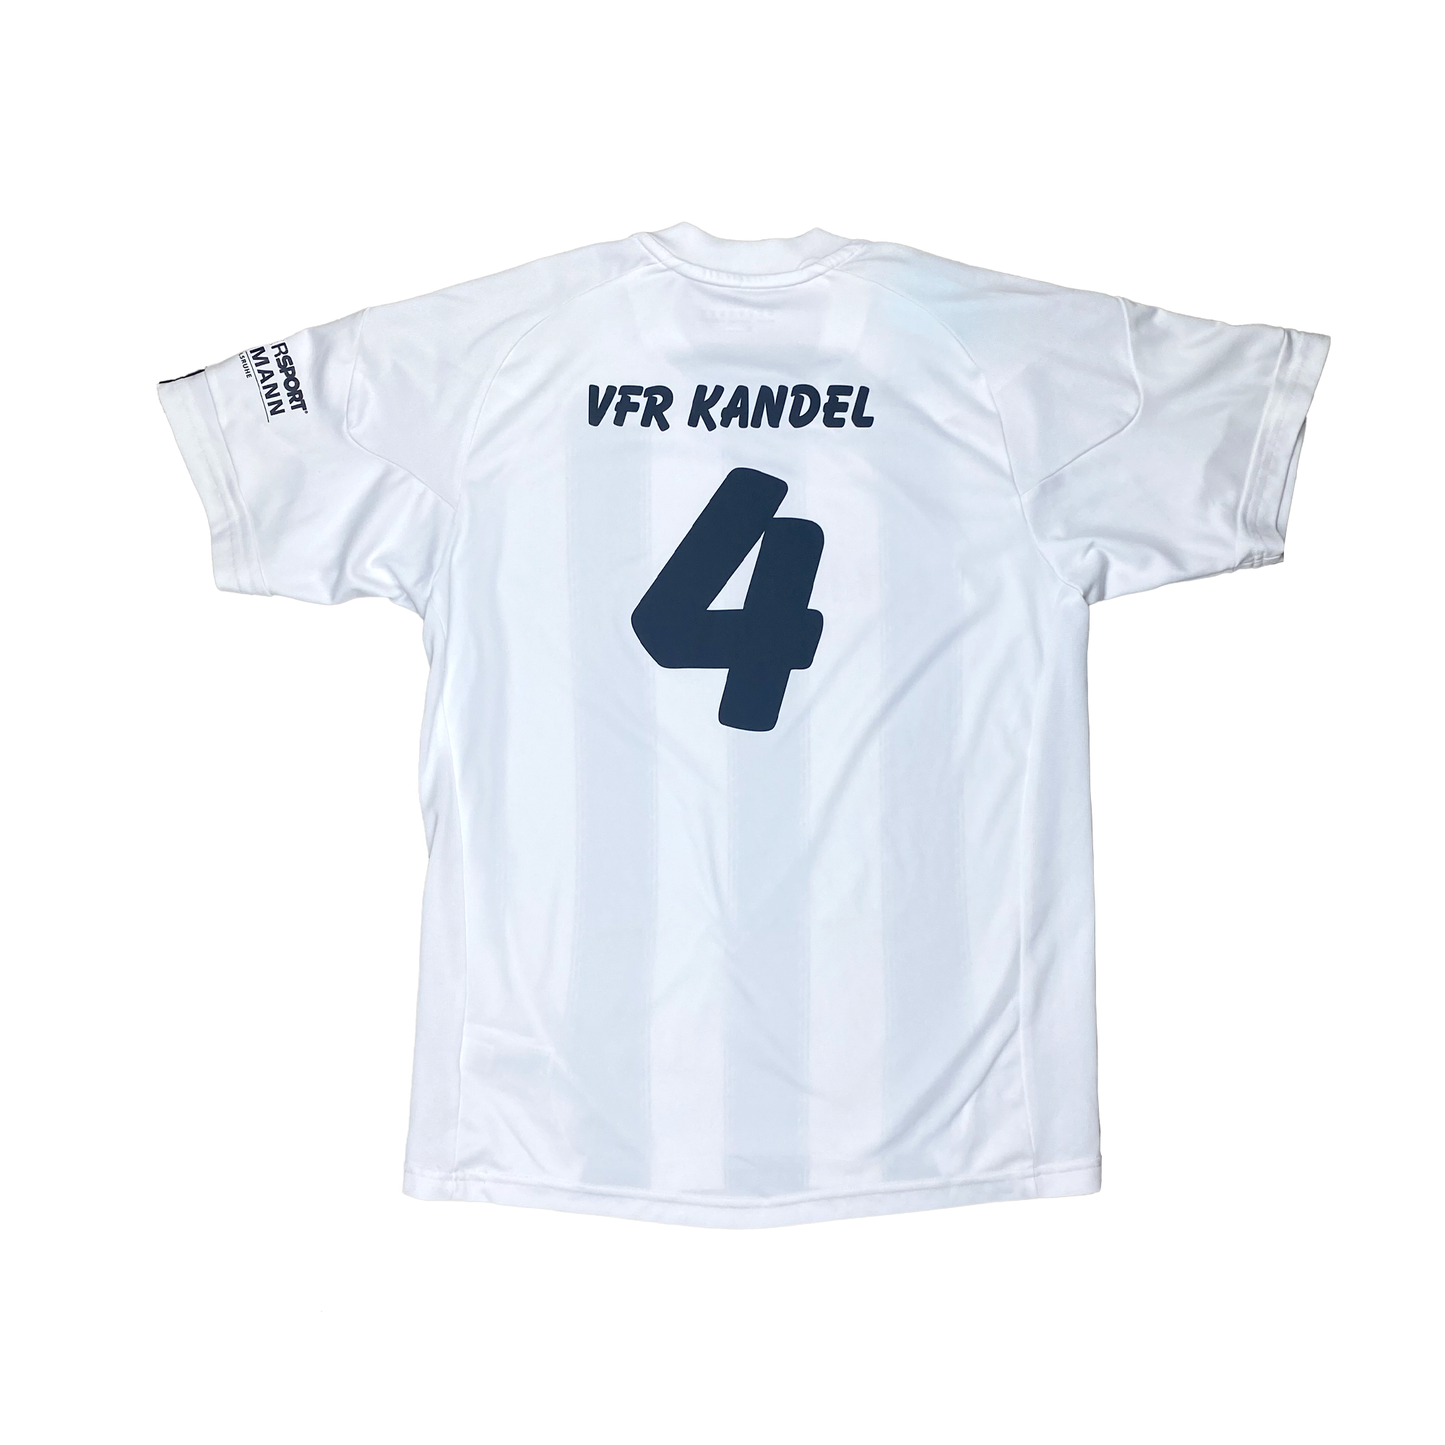 VfR Kandel Shirt | 14/15 Years